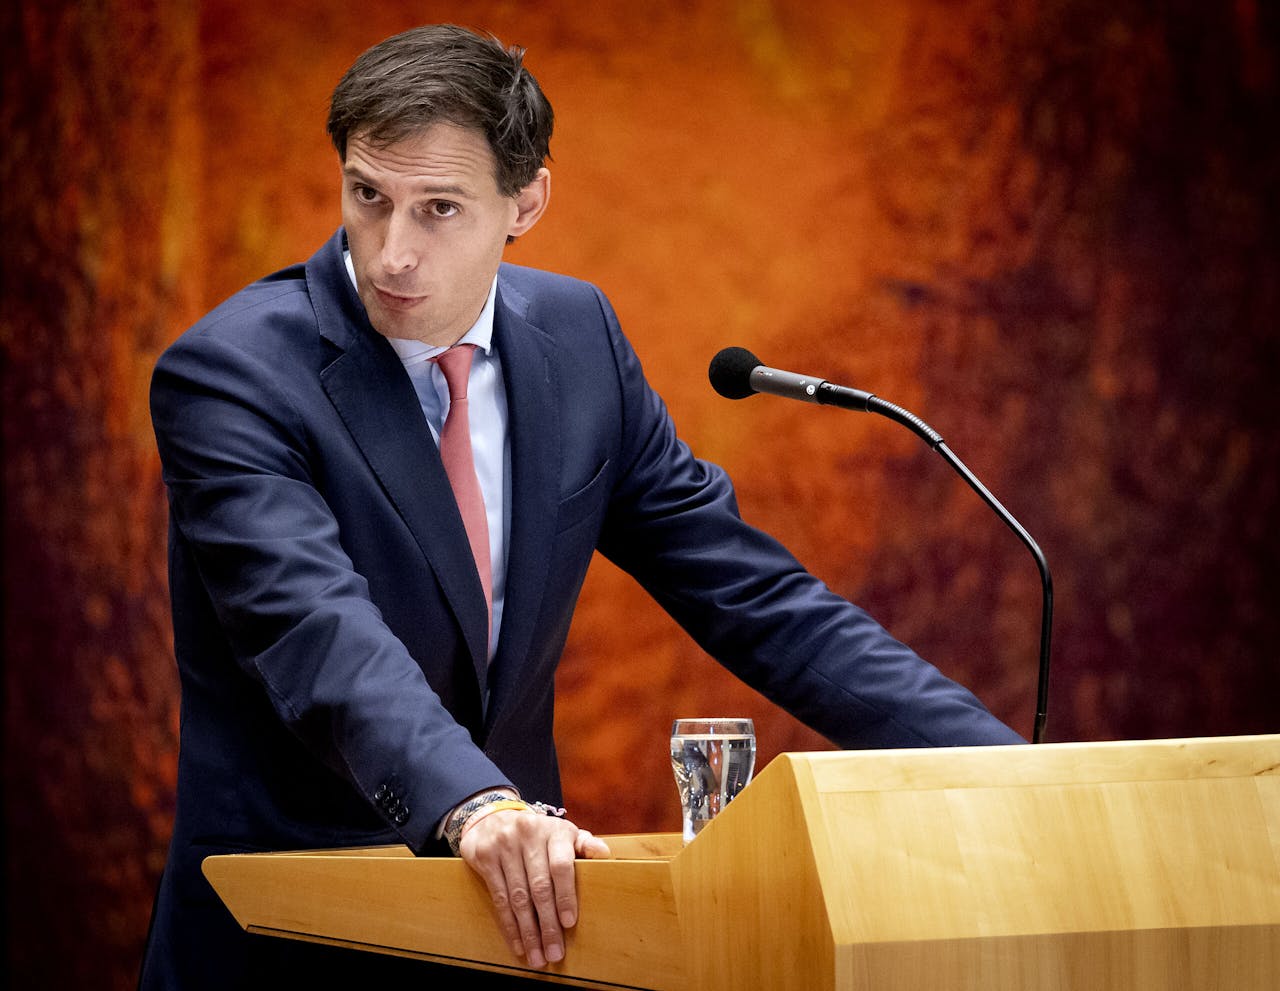 Minister van Financiën Wopke Hoekstra